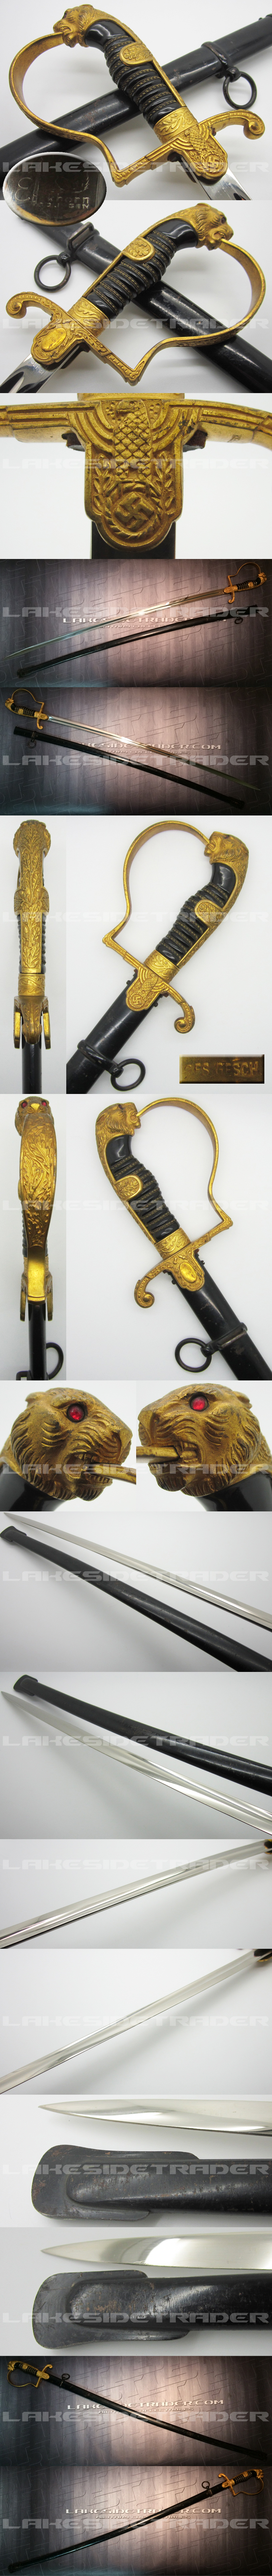 Field Marshall Series Army Sword by Eickhorn